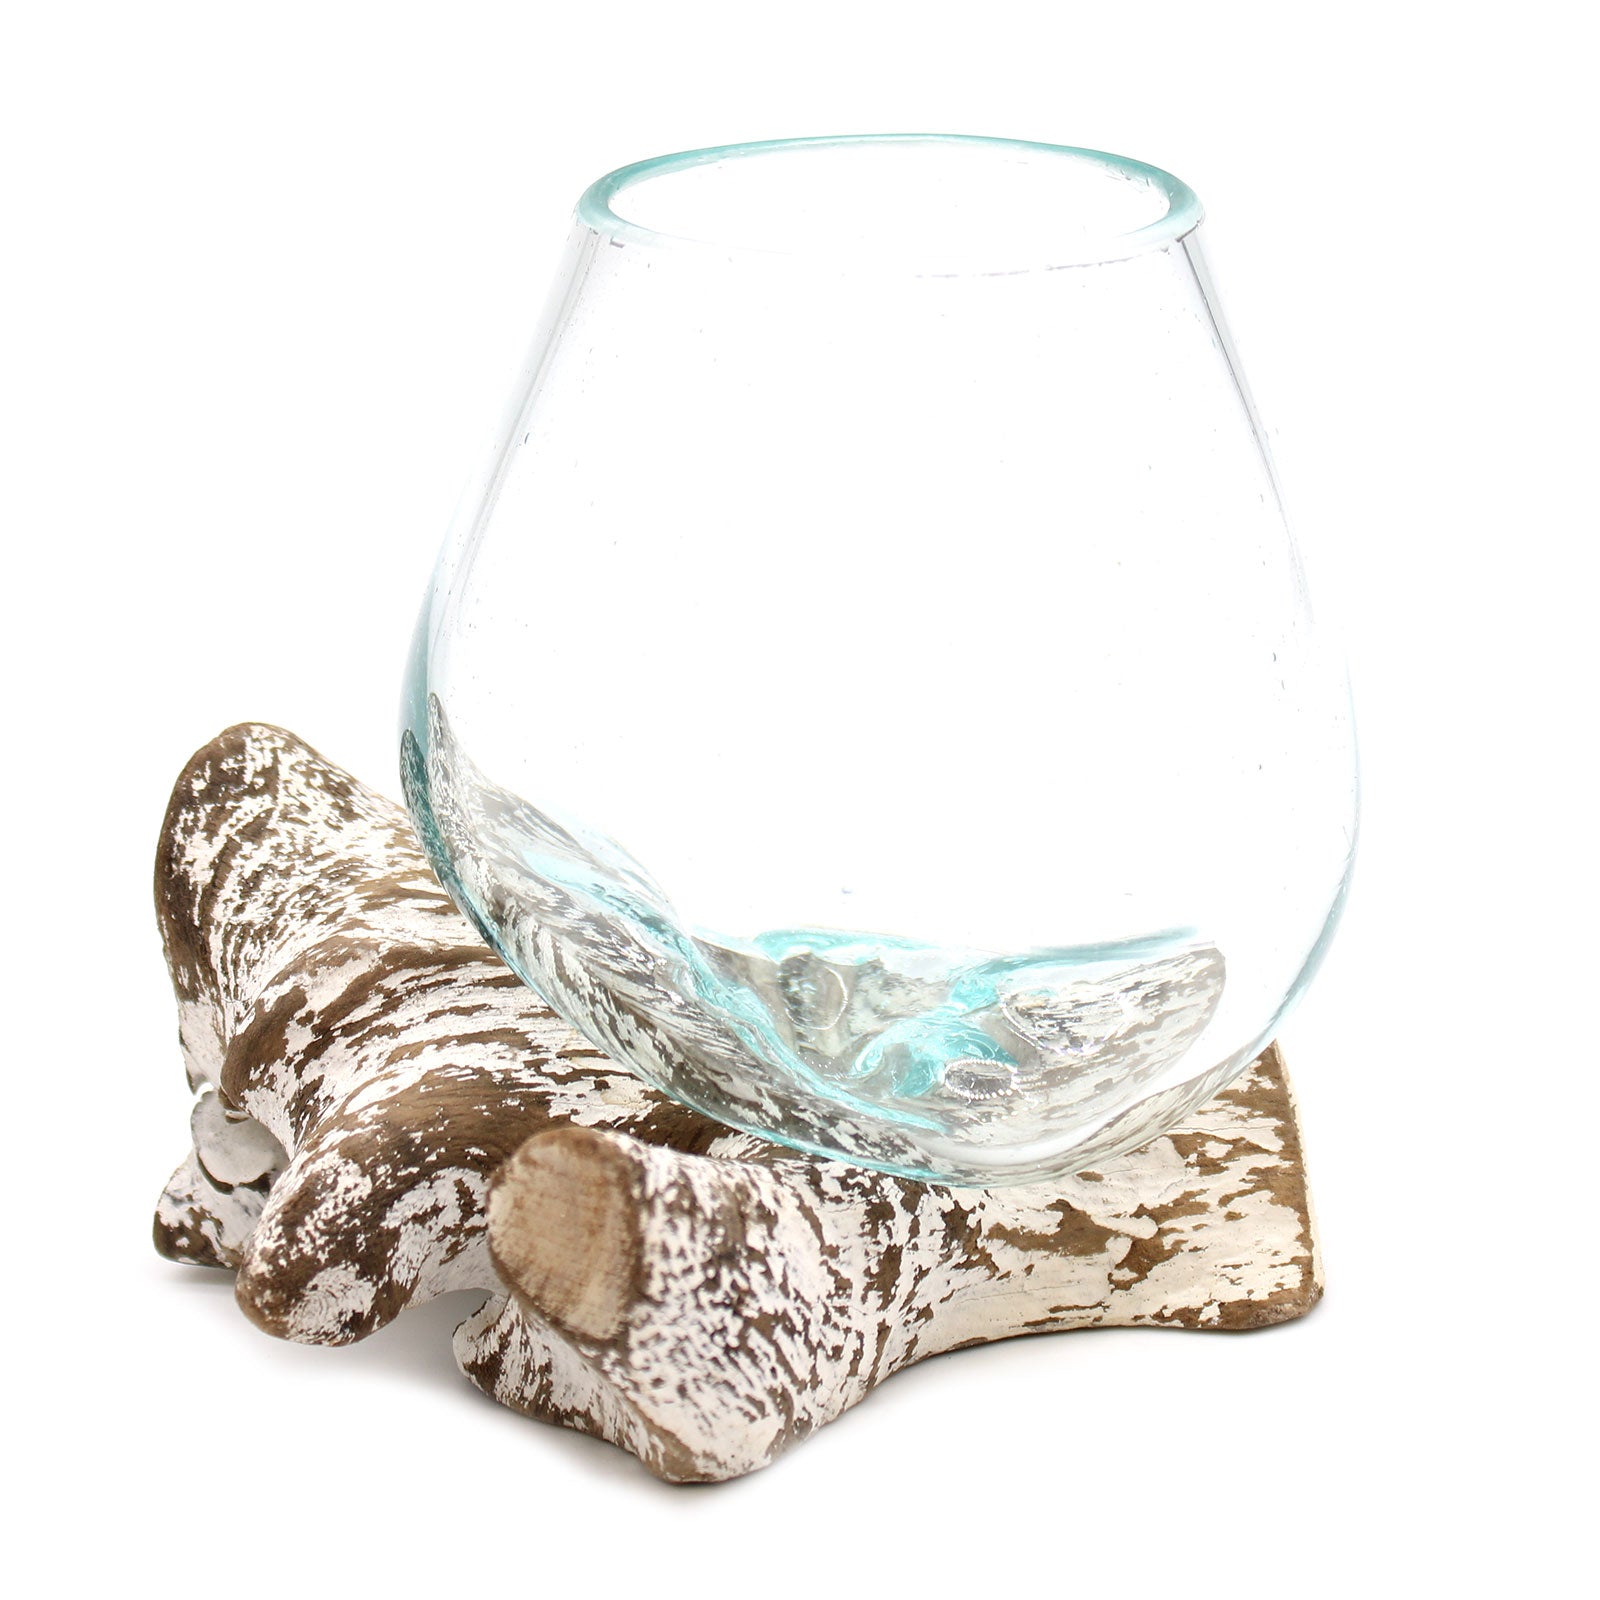 Molten Glass on Whitewash Wood - Small Bowl